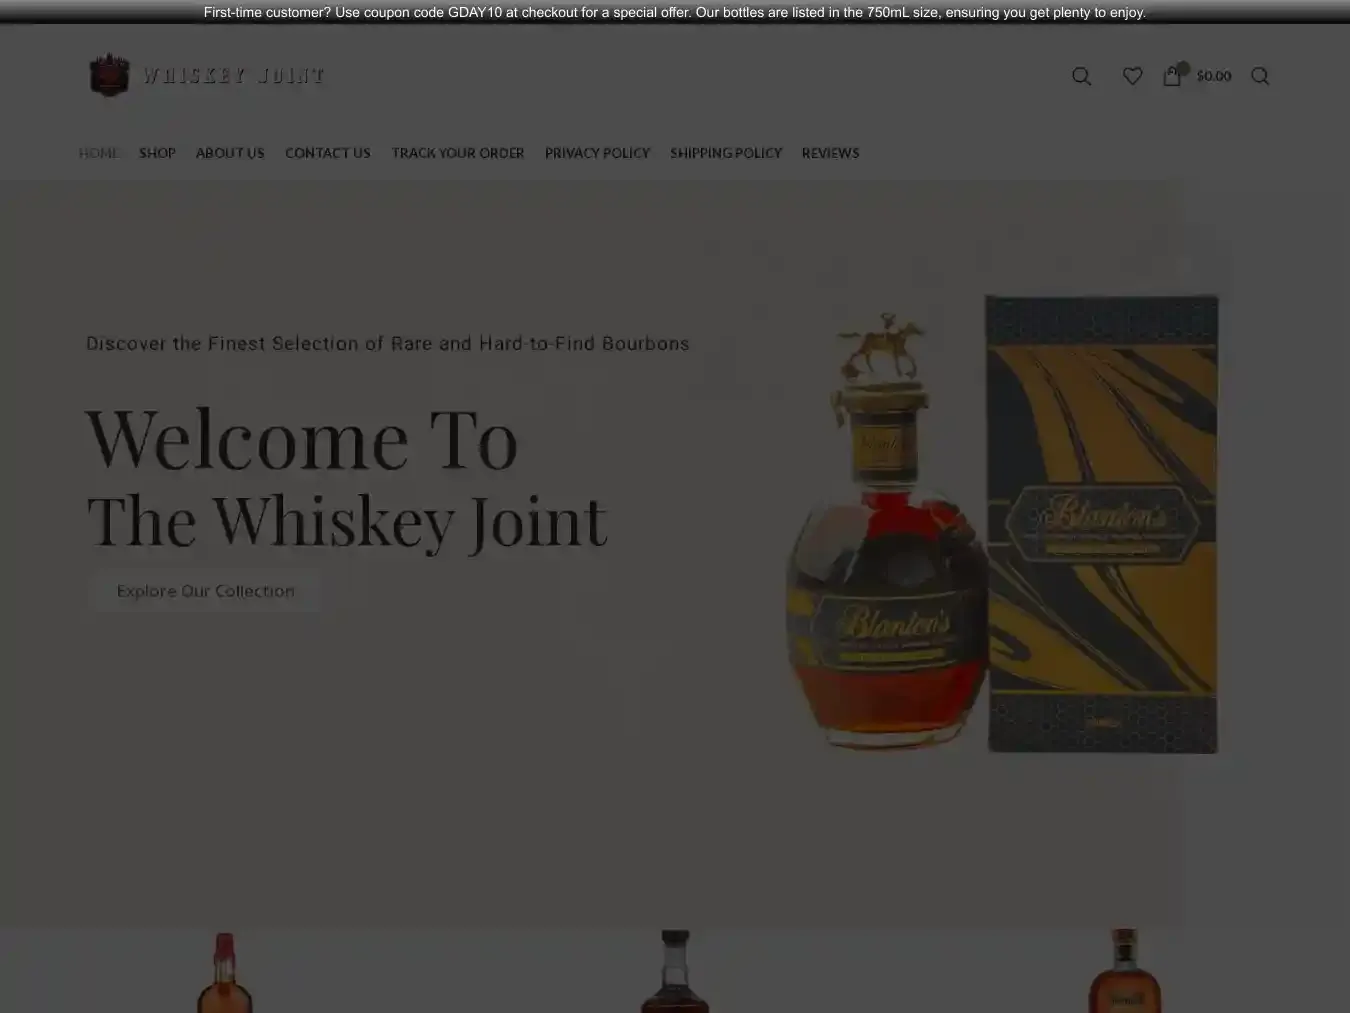 Thewhiskeyjoint.com Fraudulent Whisky website.